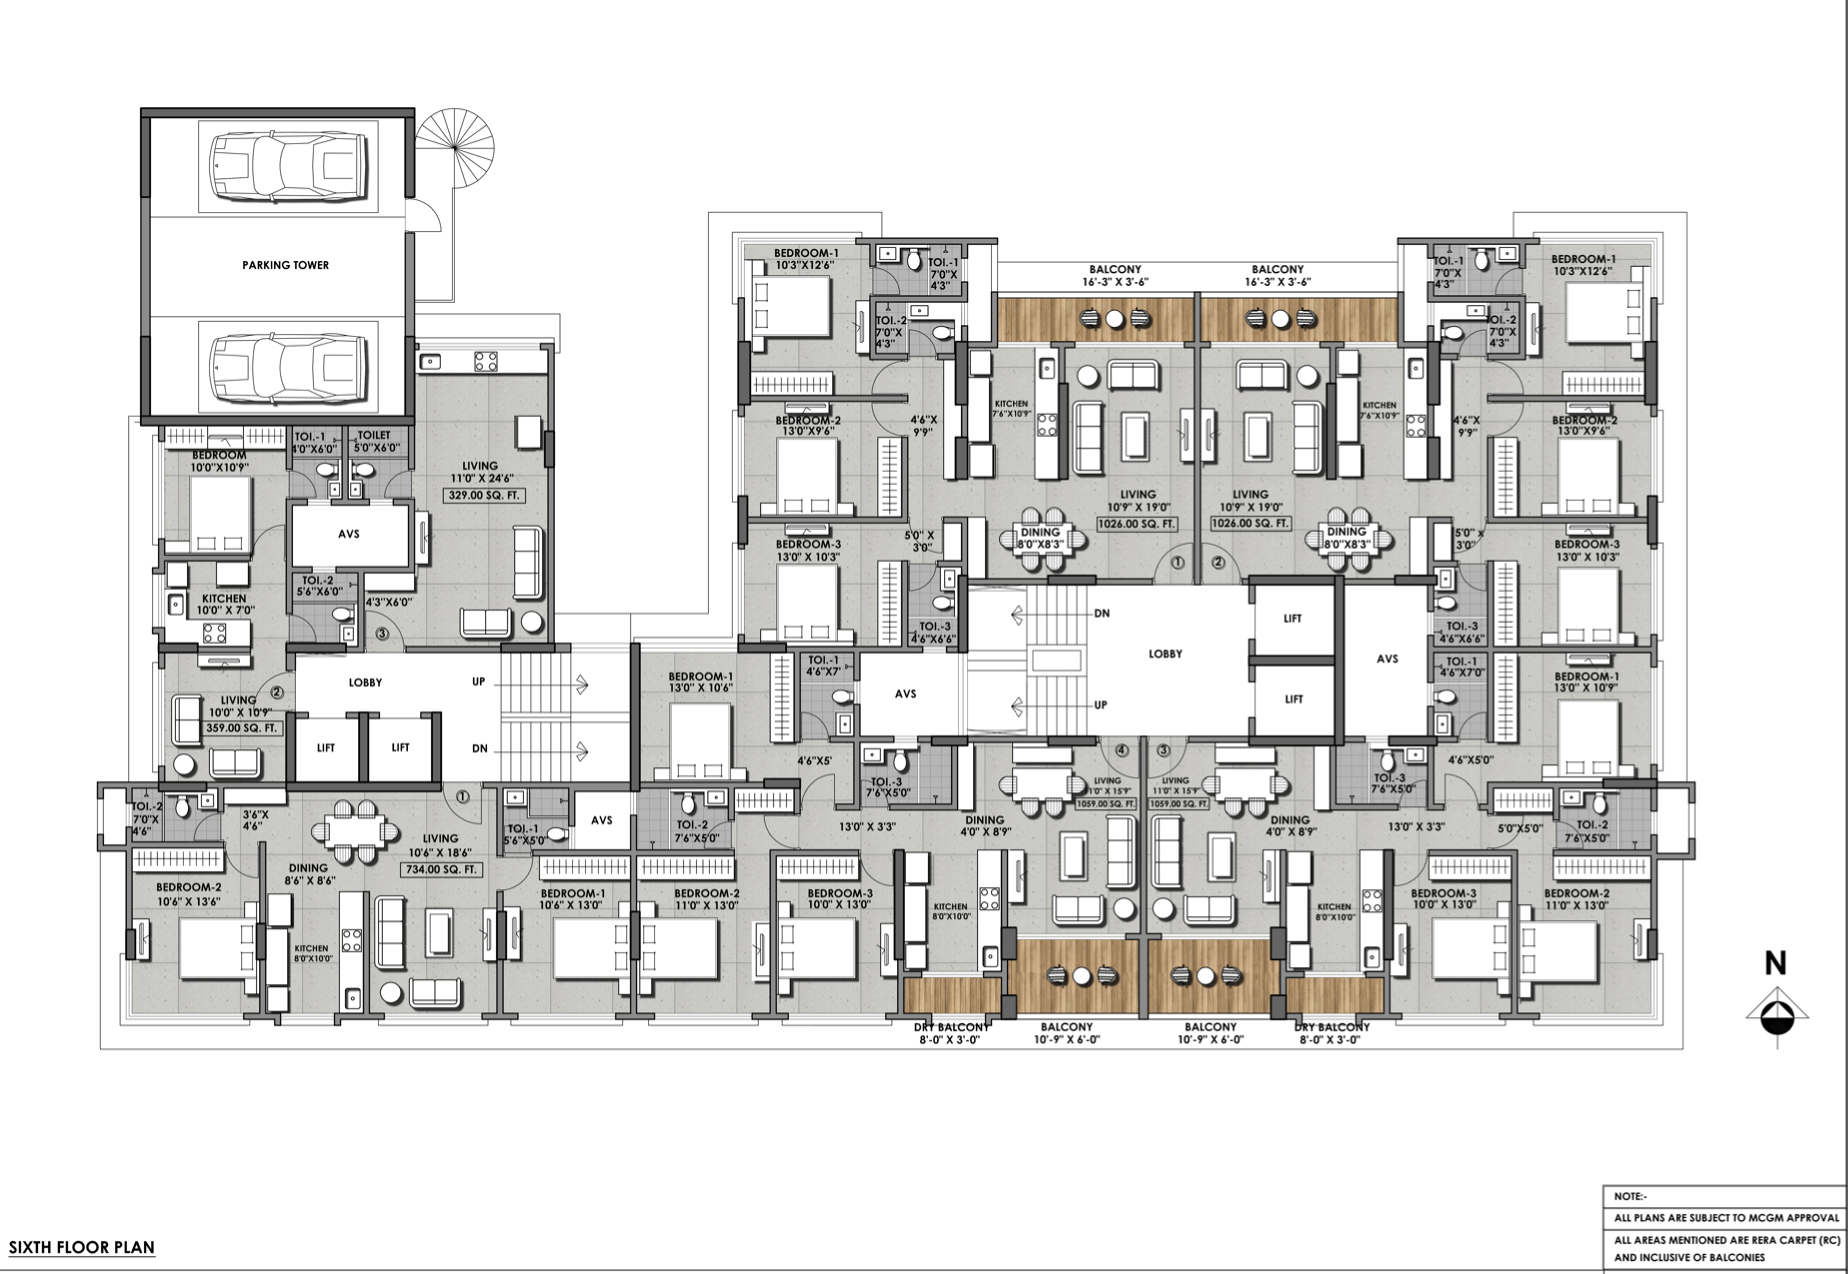 atharv laxmi floor plan 6 Layout Image